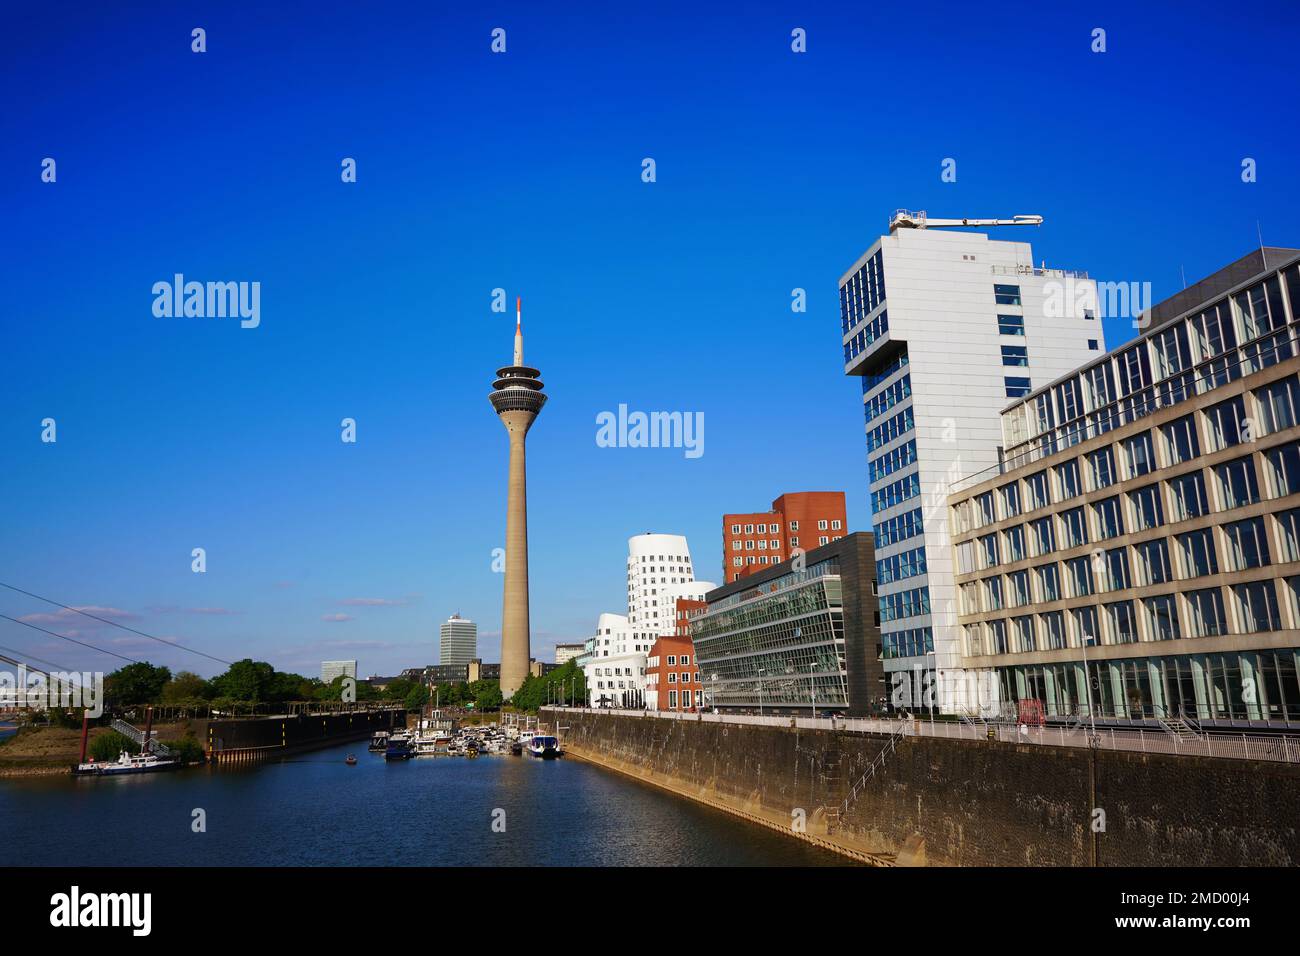 Medienhafen in Düsseldorf/Germany with Düsseldorf's landmark, the Rhine Tower, and modern Gehry Buildings by Frank O. Gehry. Stock Photo